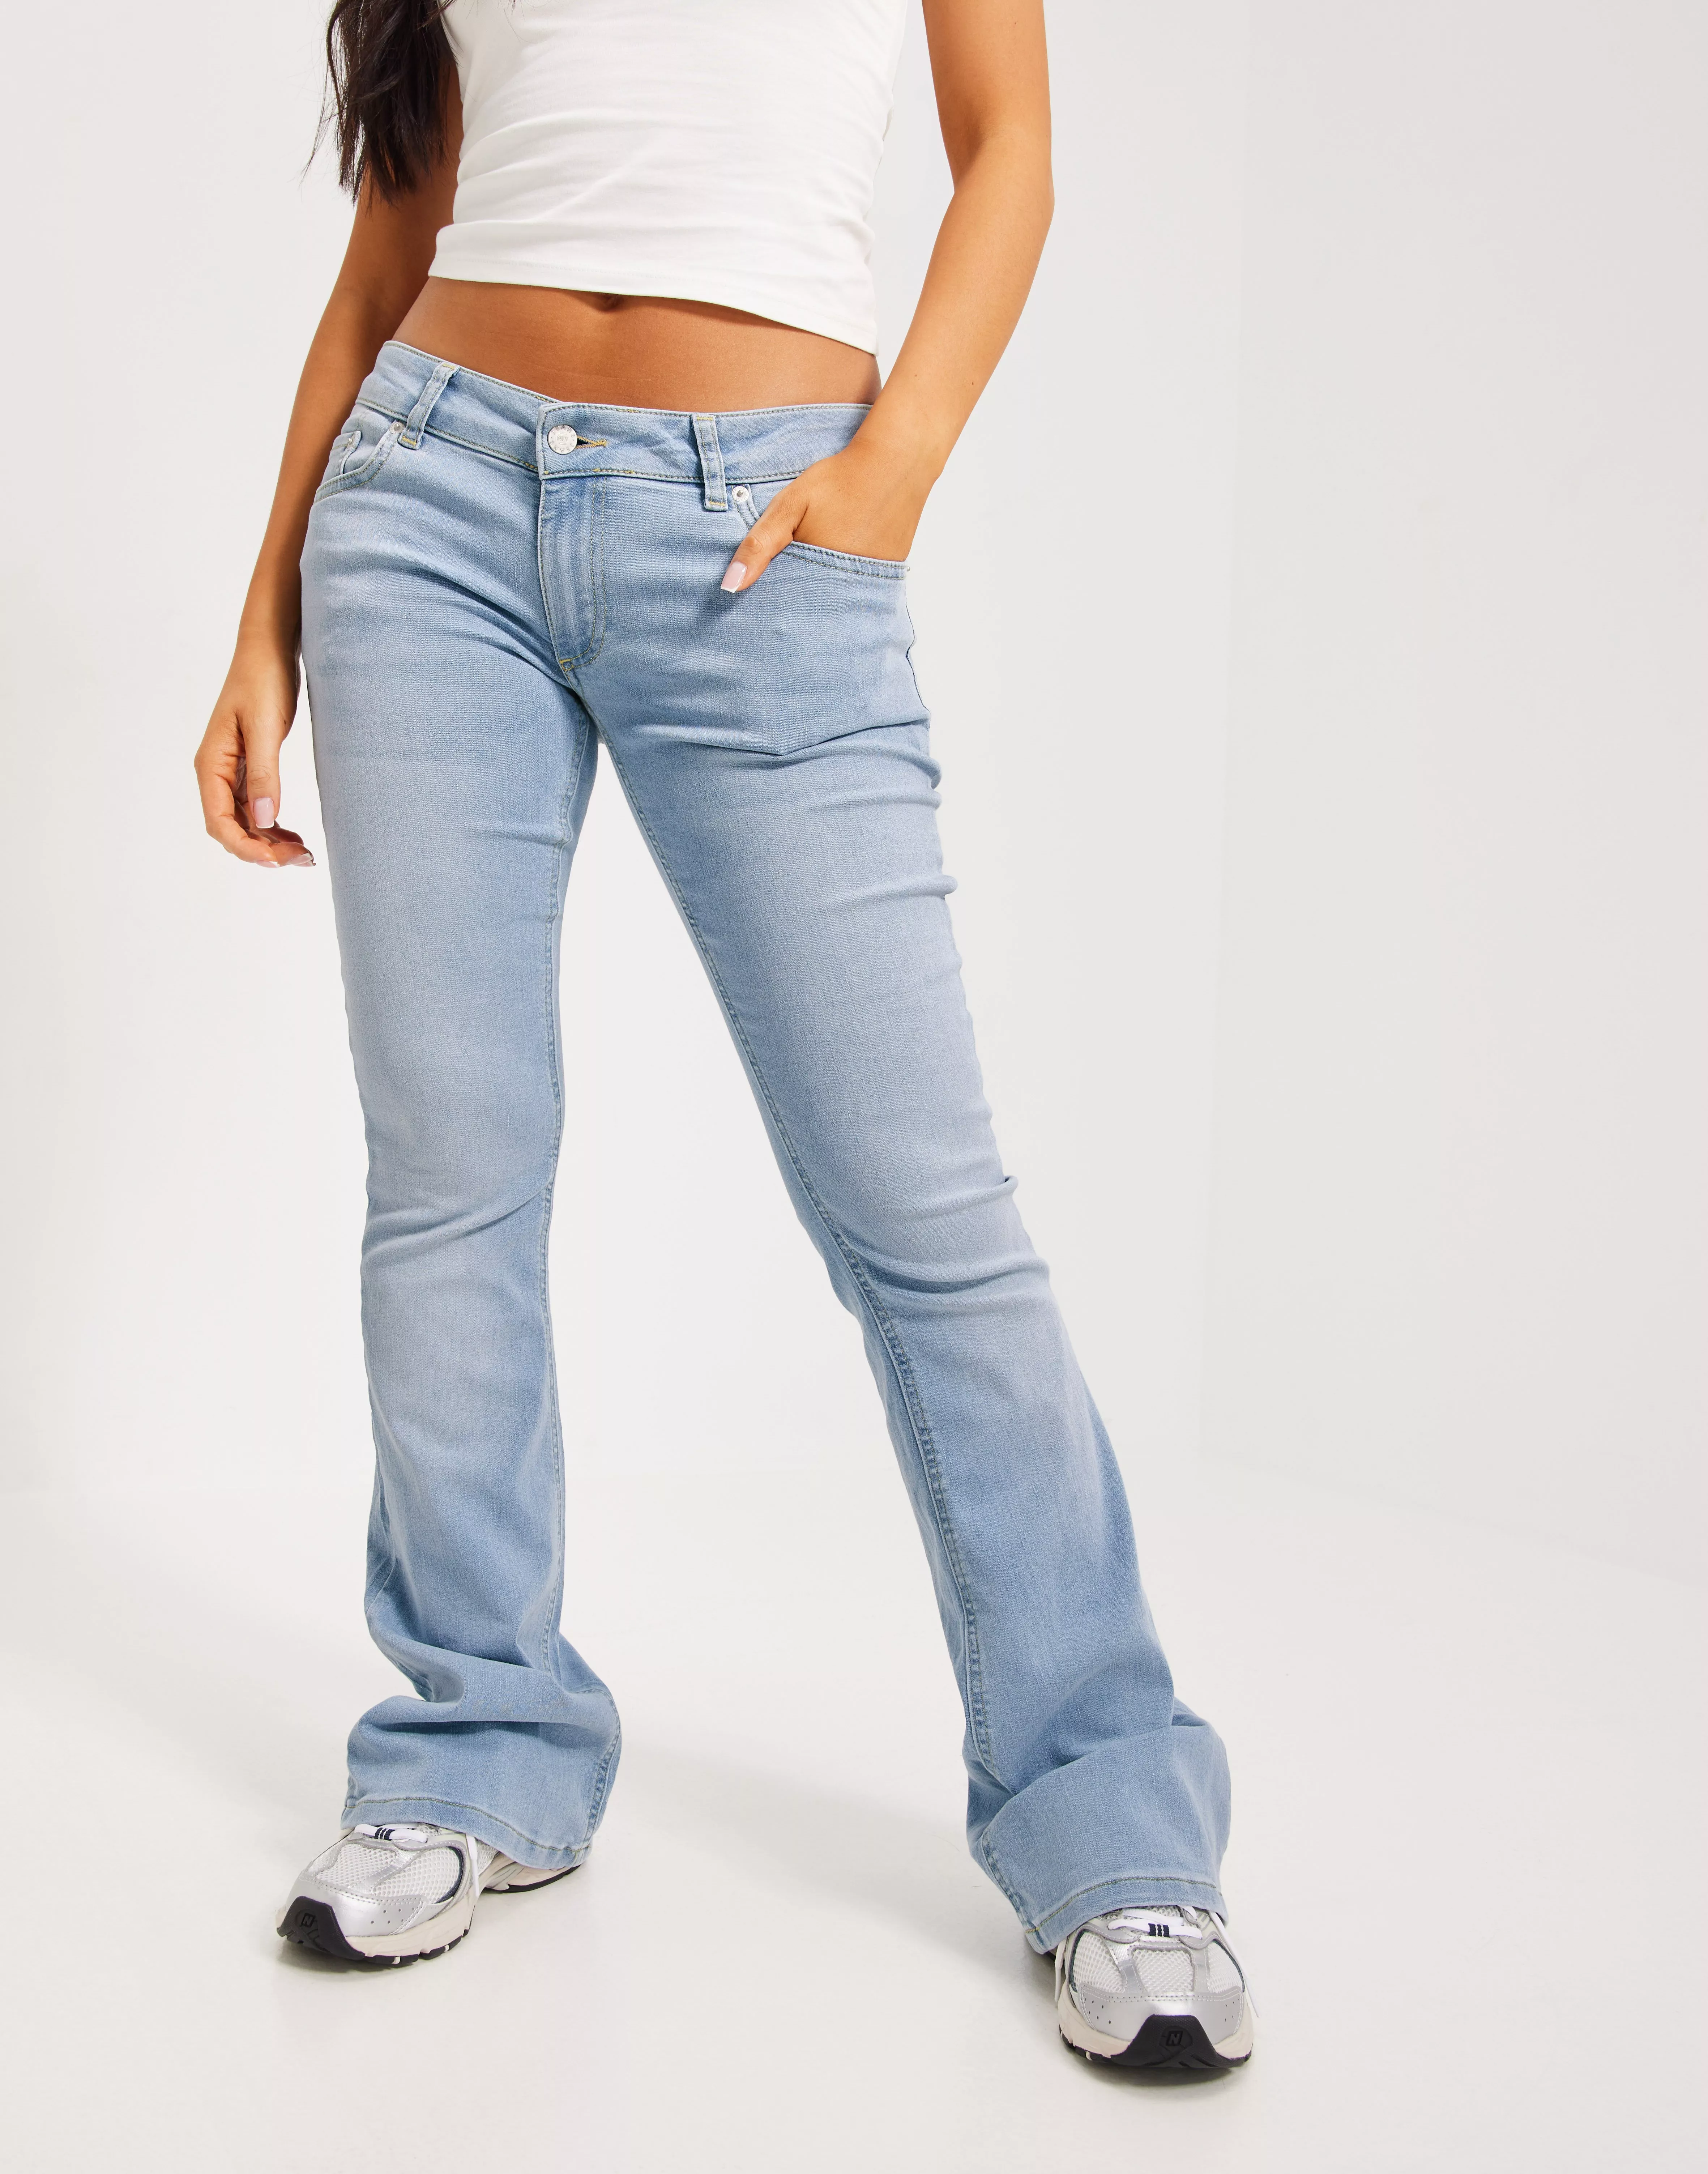 Low waist boot-cut jeans